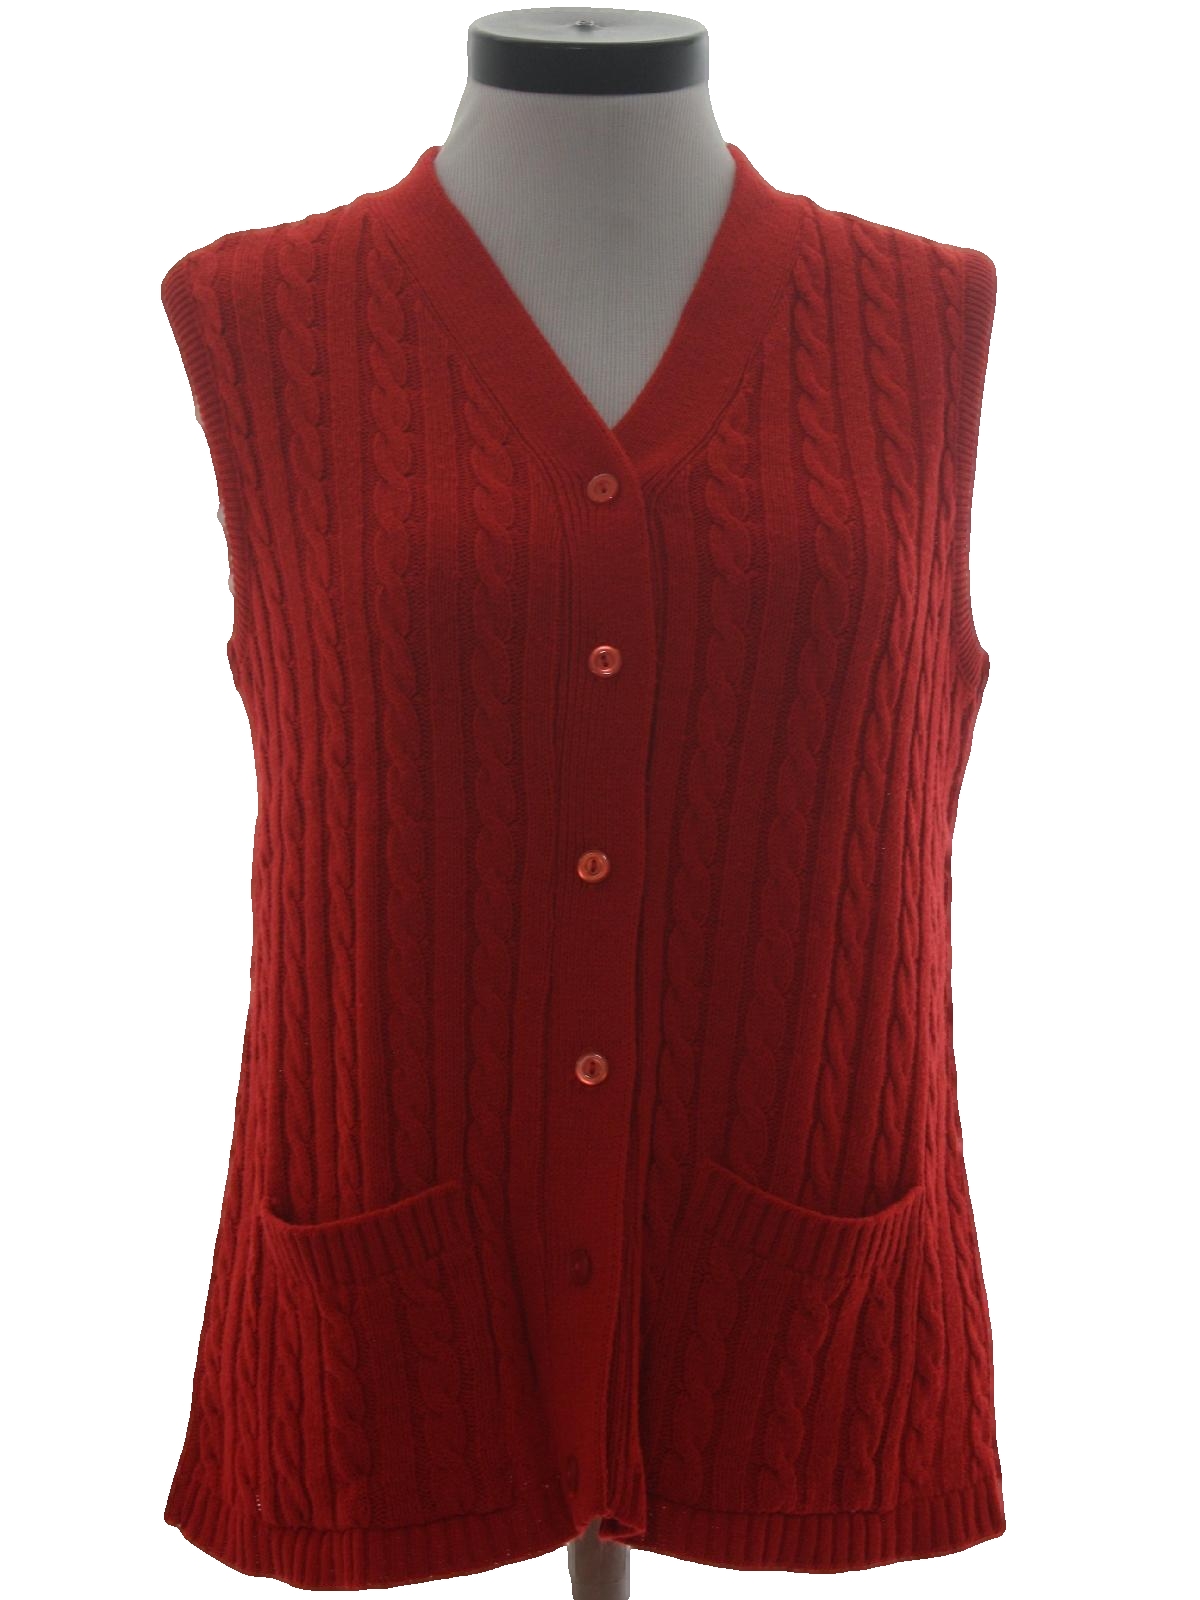 Retro 1970's Sweater (care label) : 70s -care label- Womens red acrylic ...